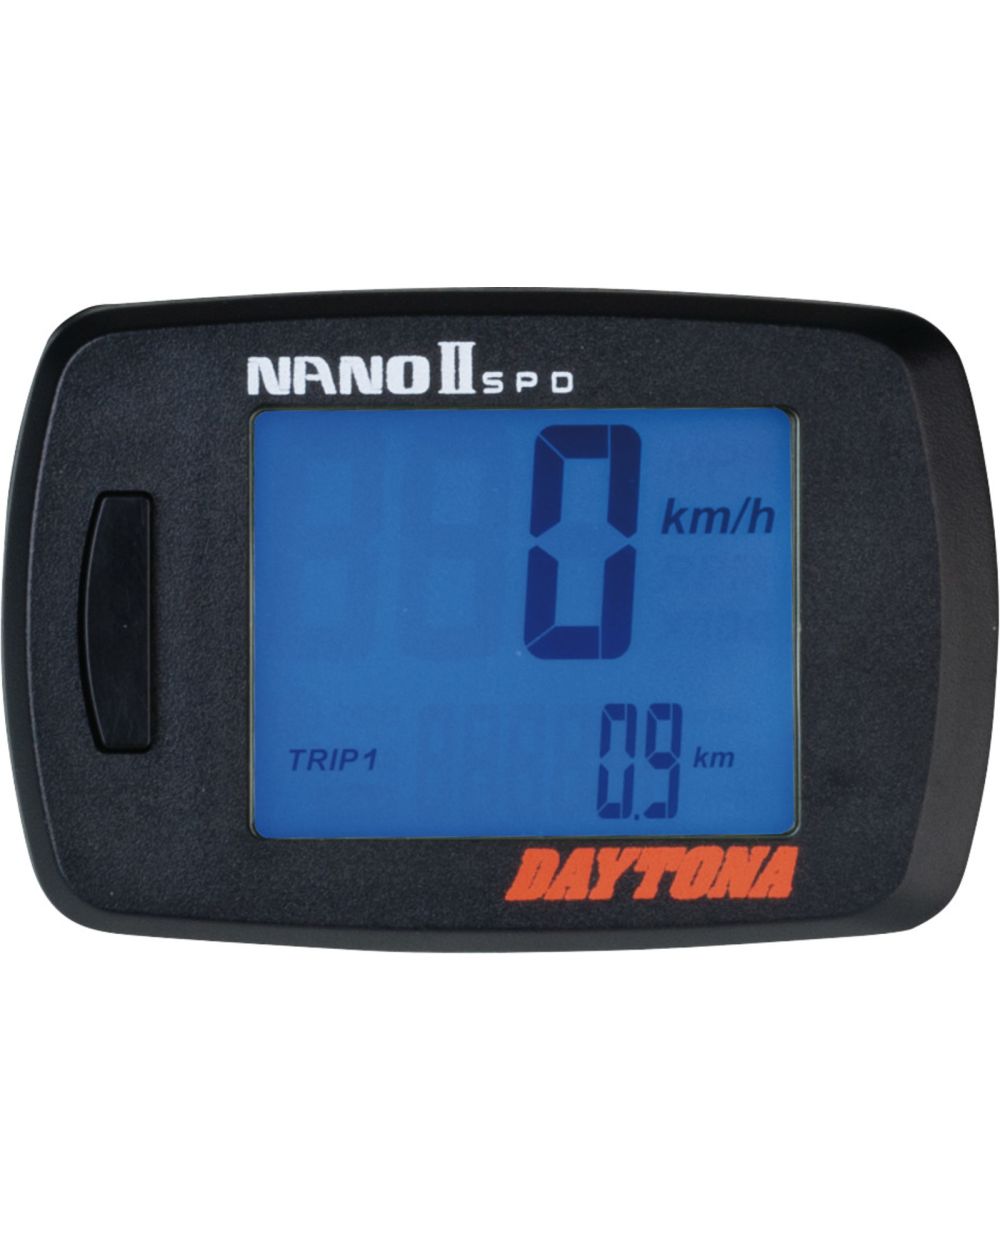 Daytona 'Nano II' Tachometer, Abm. nur 60x40x17,5mm, e-geprüft, inkl. Sensor,  weiße Hintergrundbeleuchtung/LCD, Funktionen: km/h,Vmax,Gesamt-km,Uhr